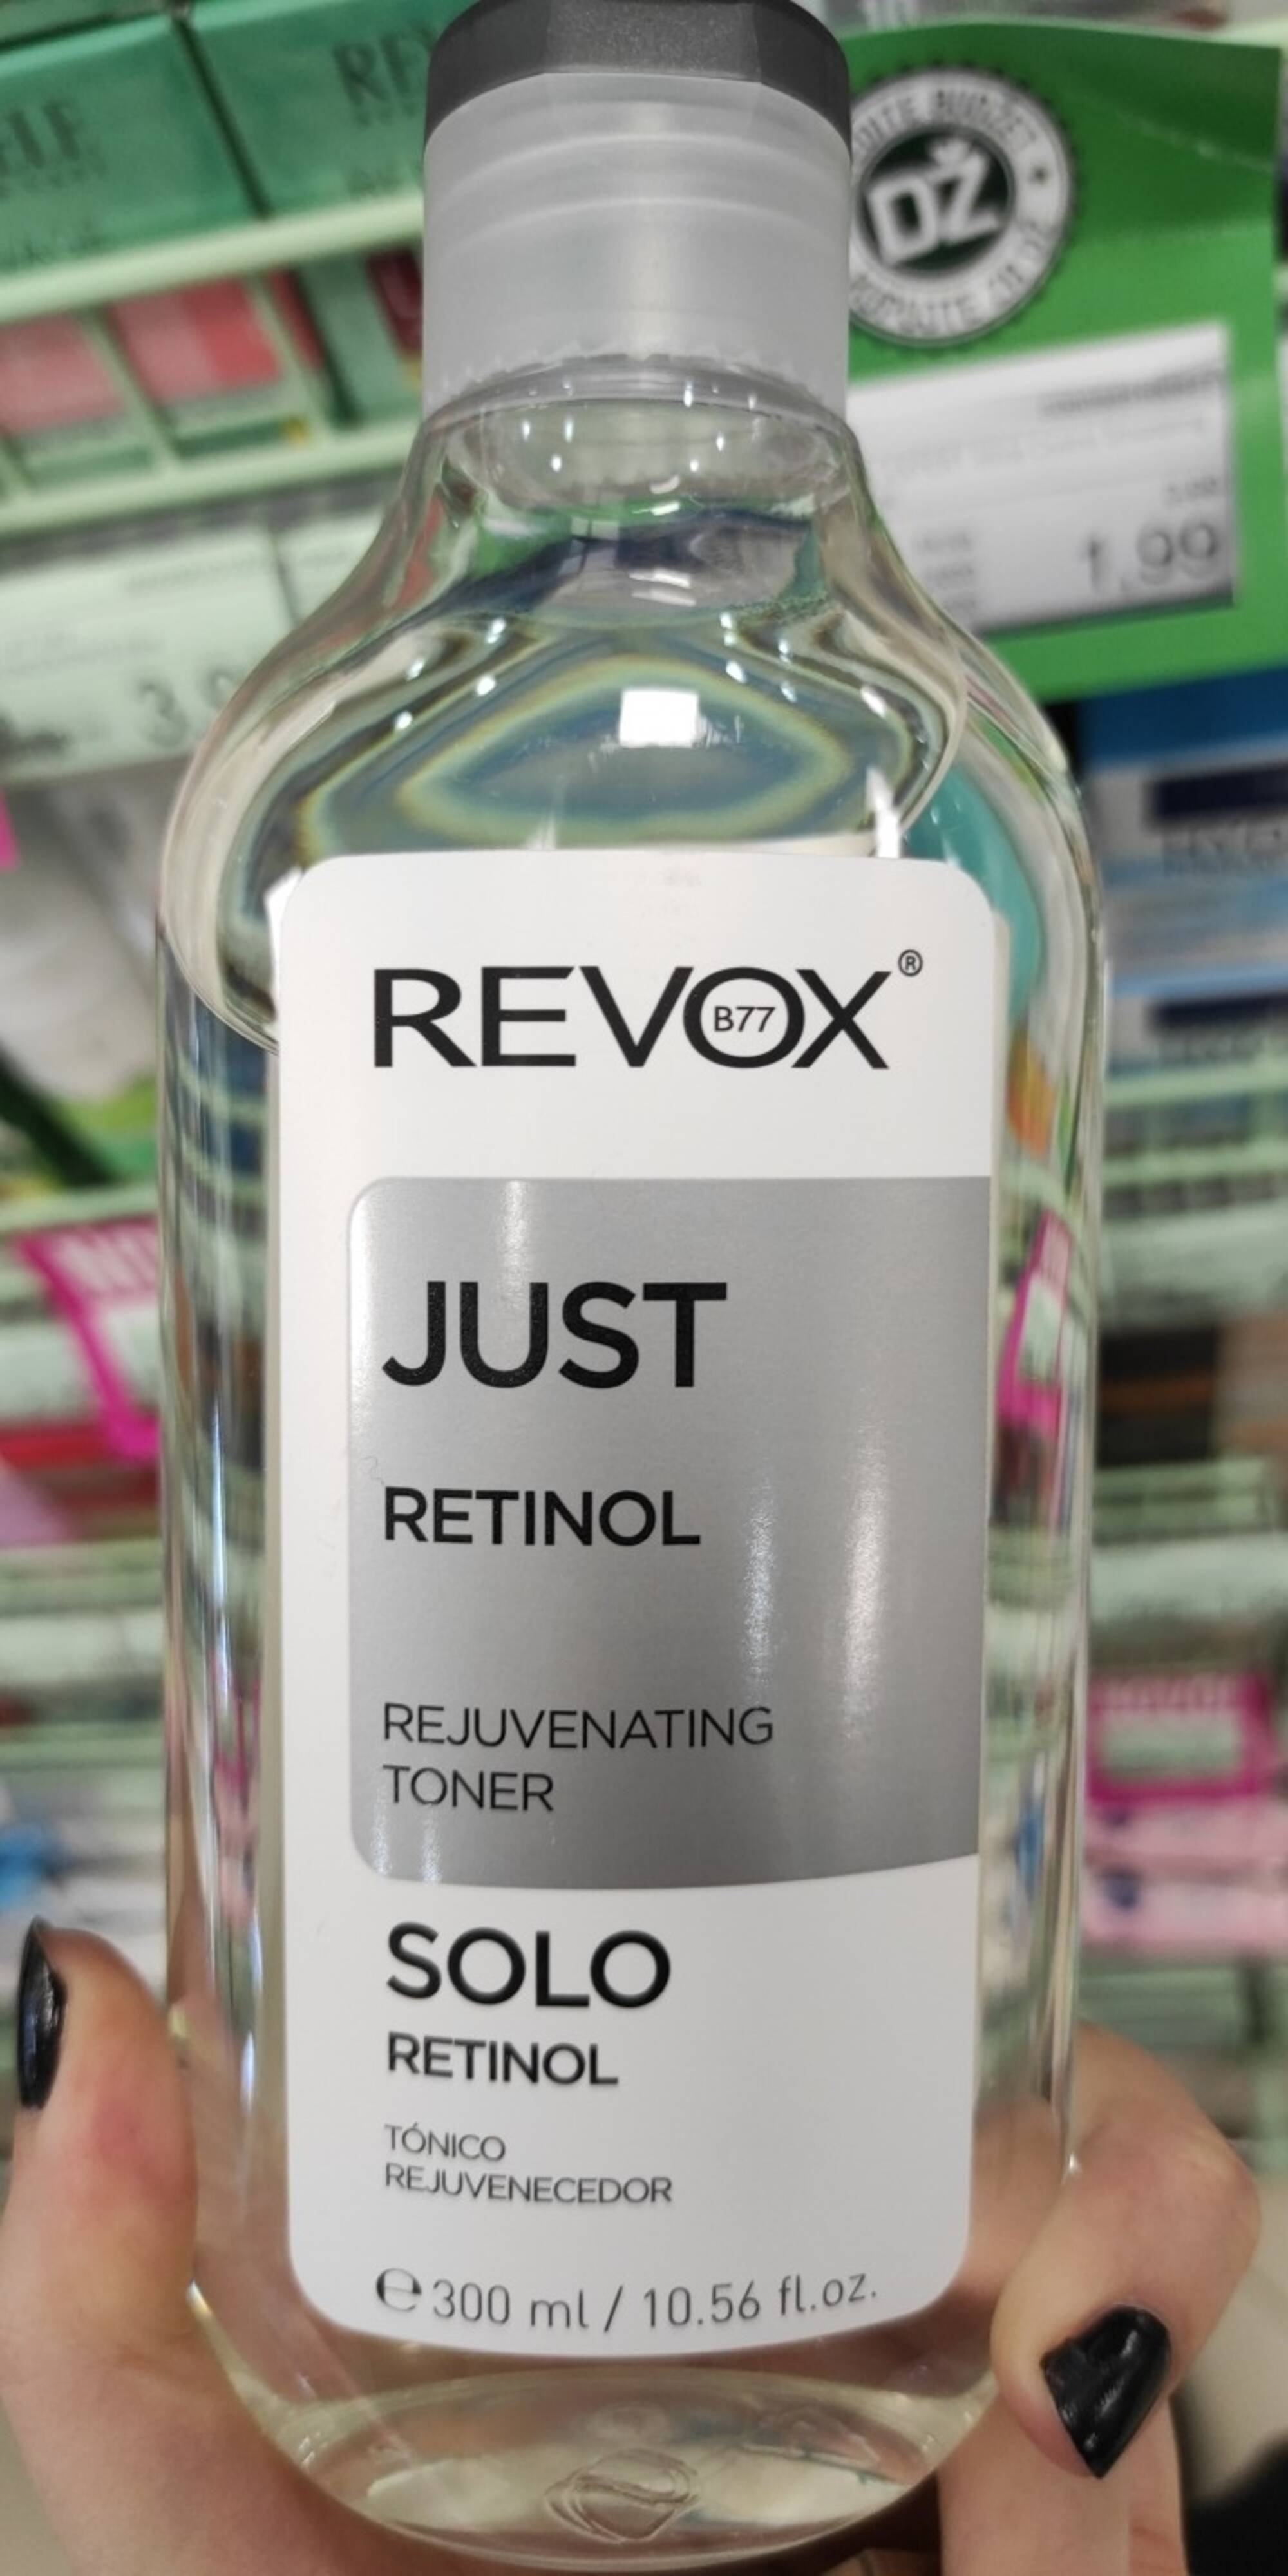 REVOX - Just retinol  - Rejuvenating toner